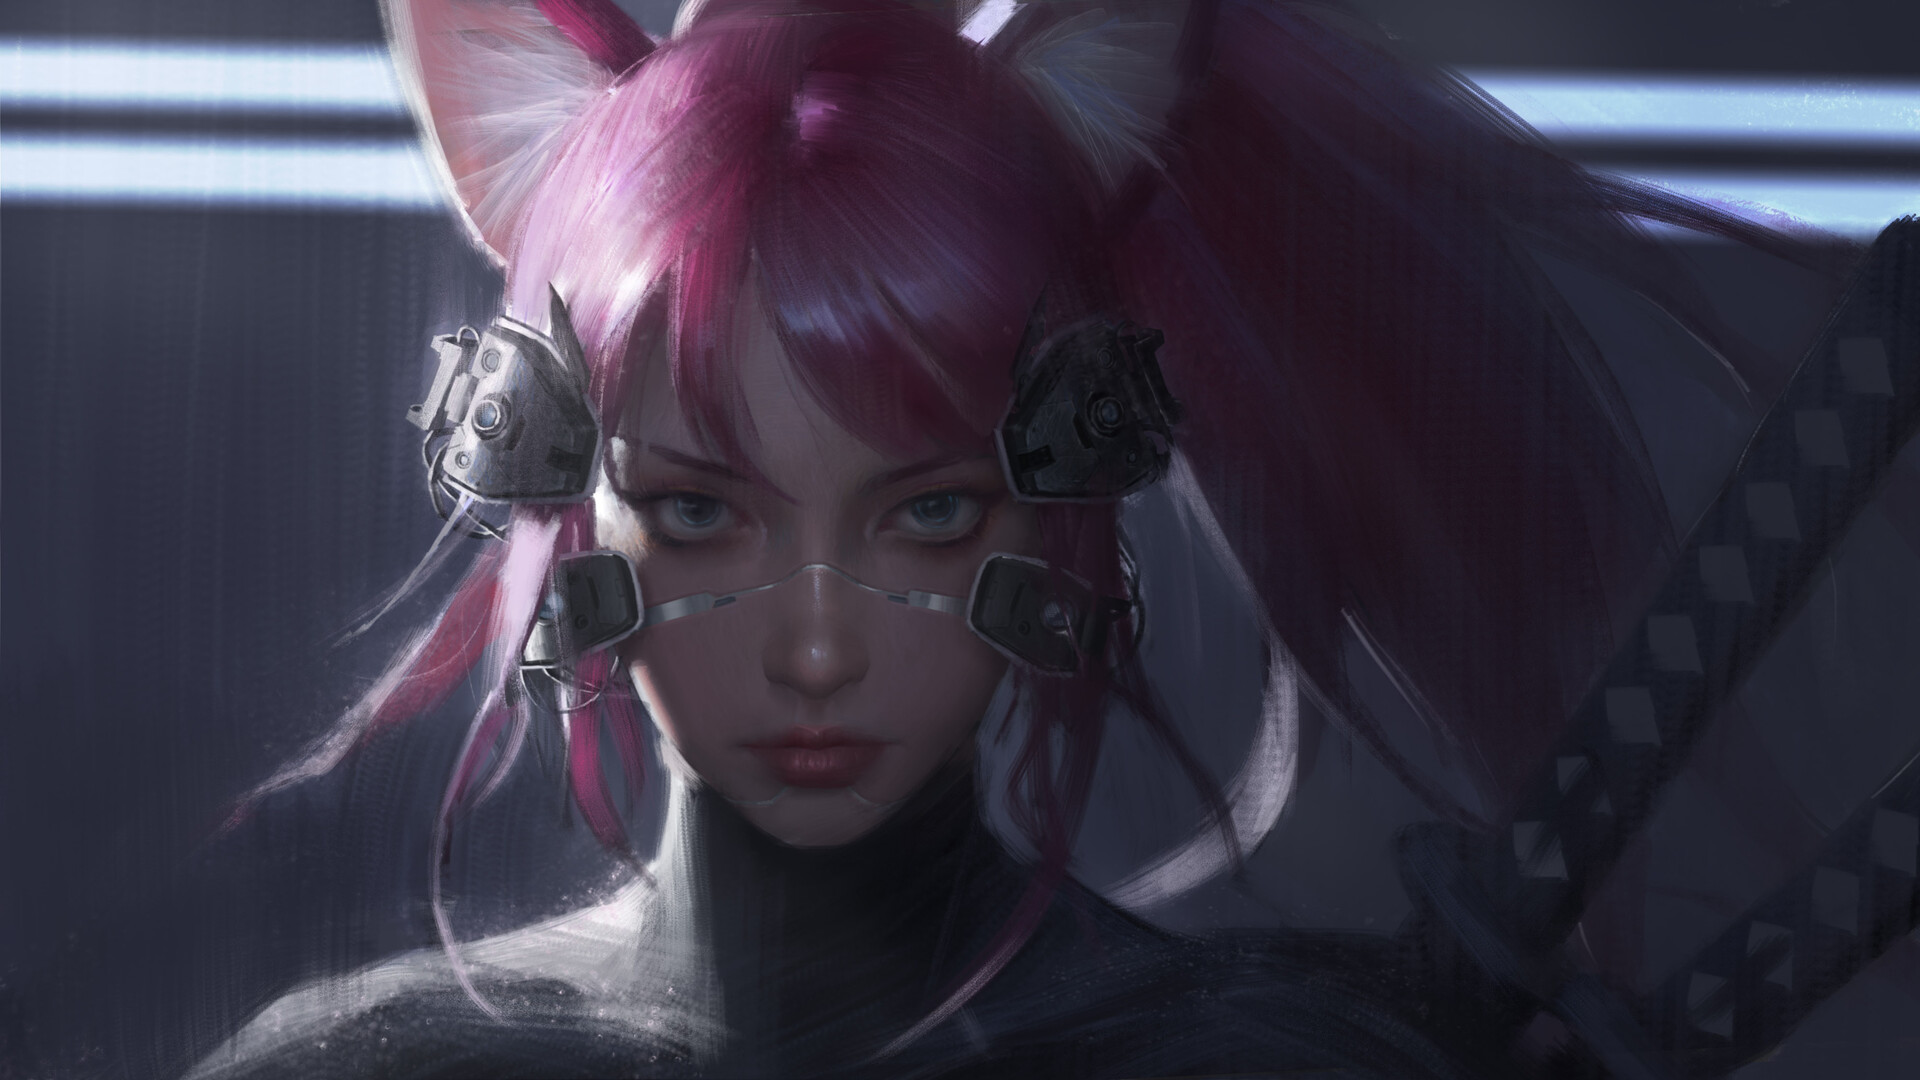 Yuhong Ding Drawing Women Cyberpunk Cat Girl Pink Hair Ponytail Portrait Looking At Viewer Weapon Ka 1920x1080